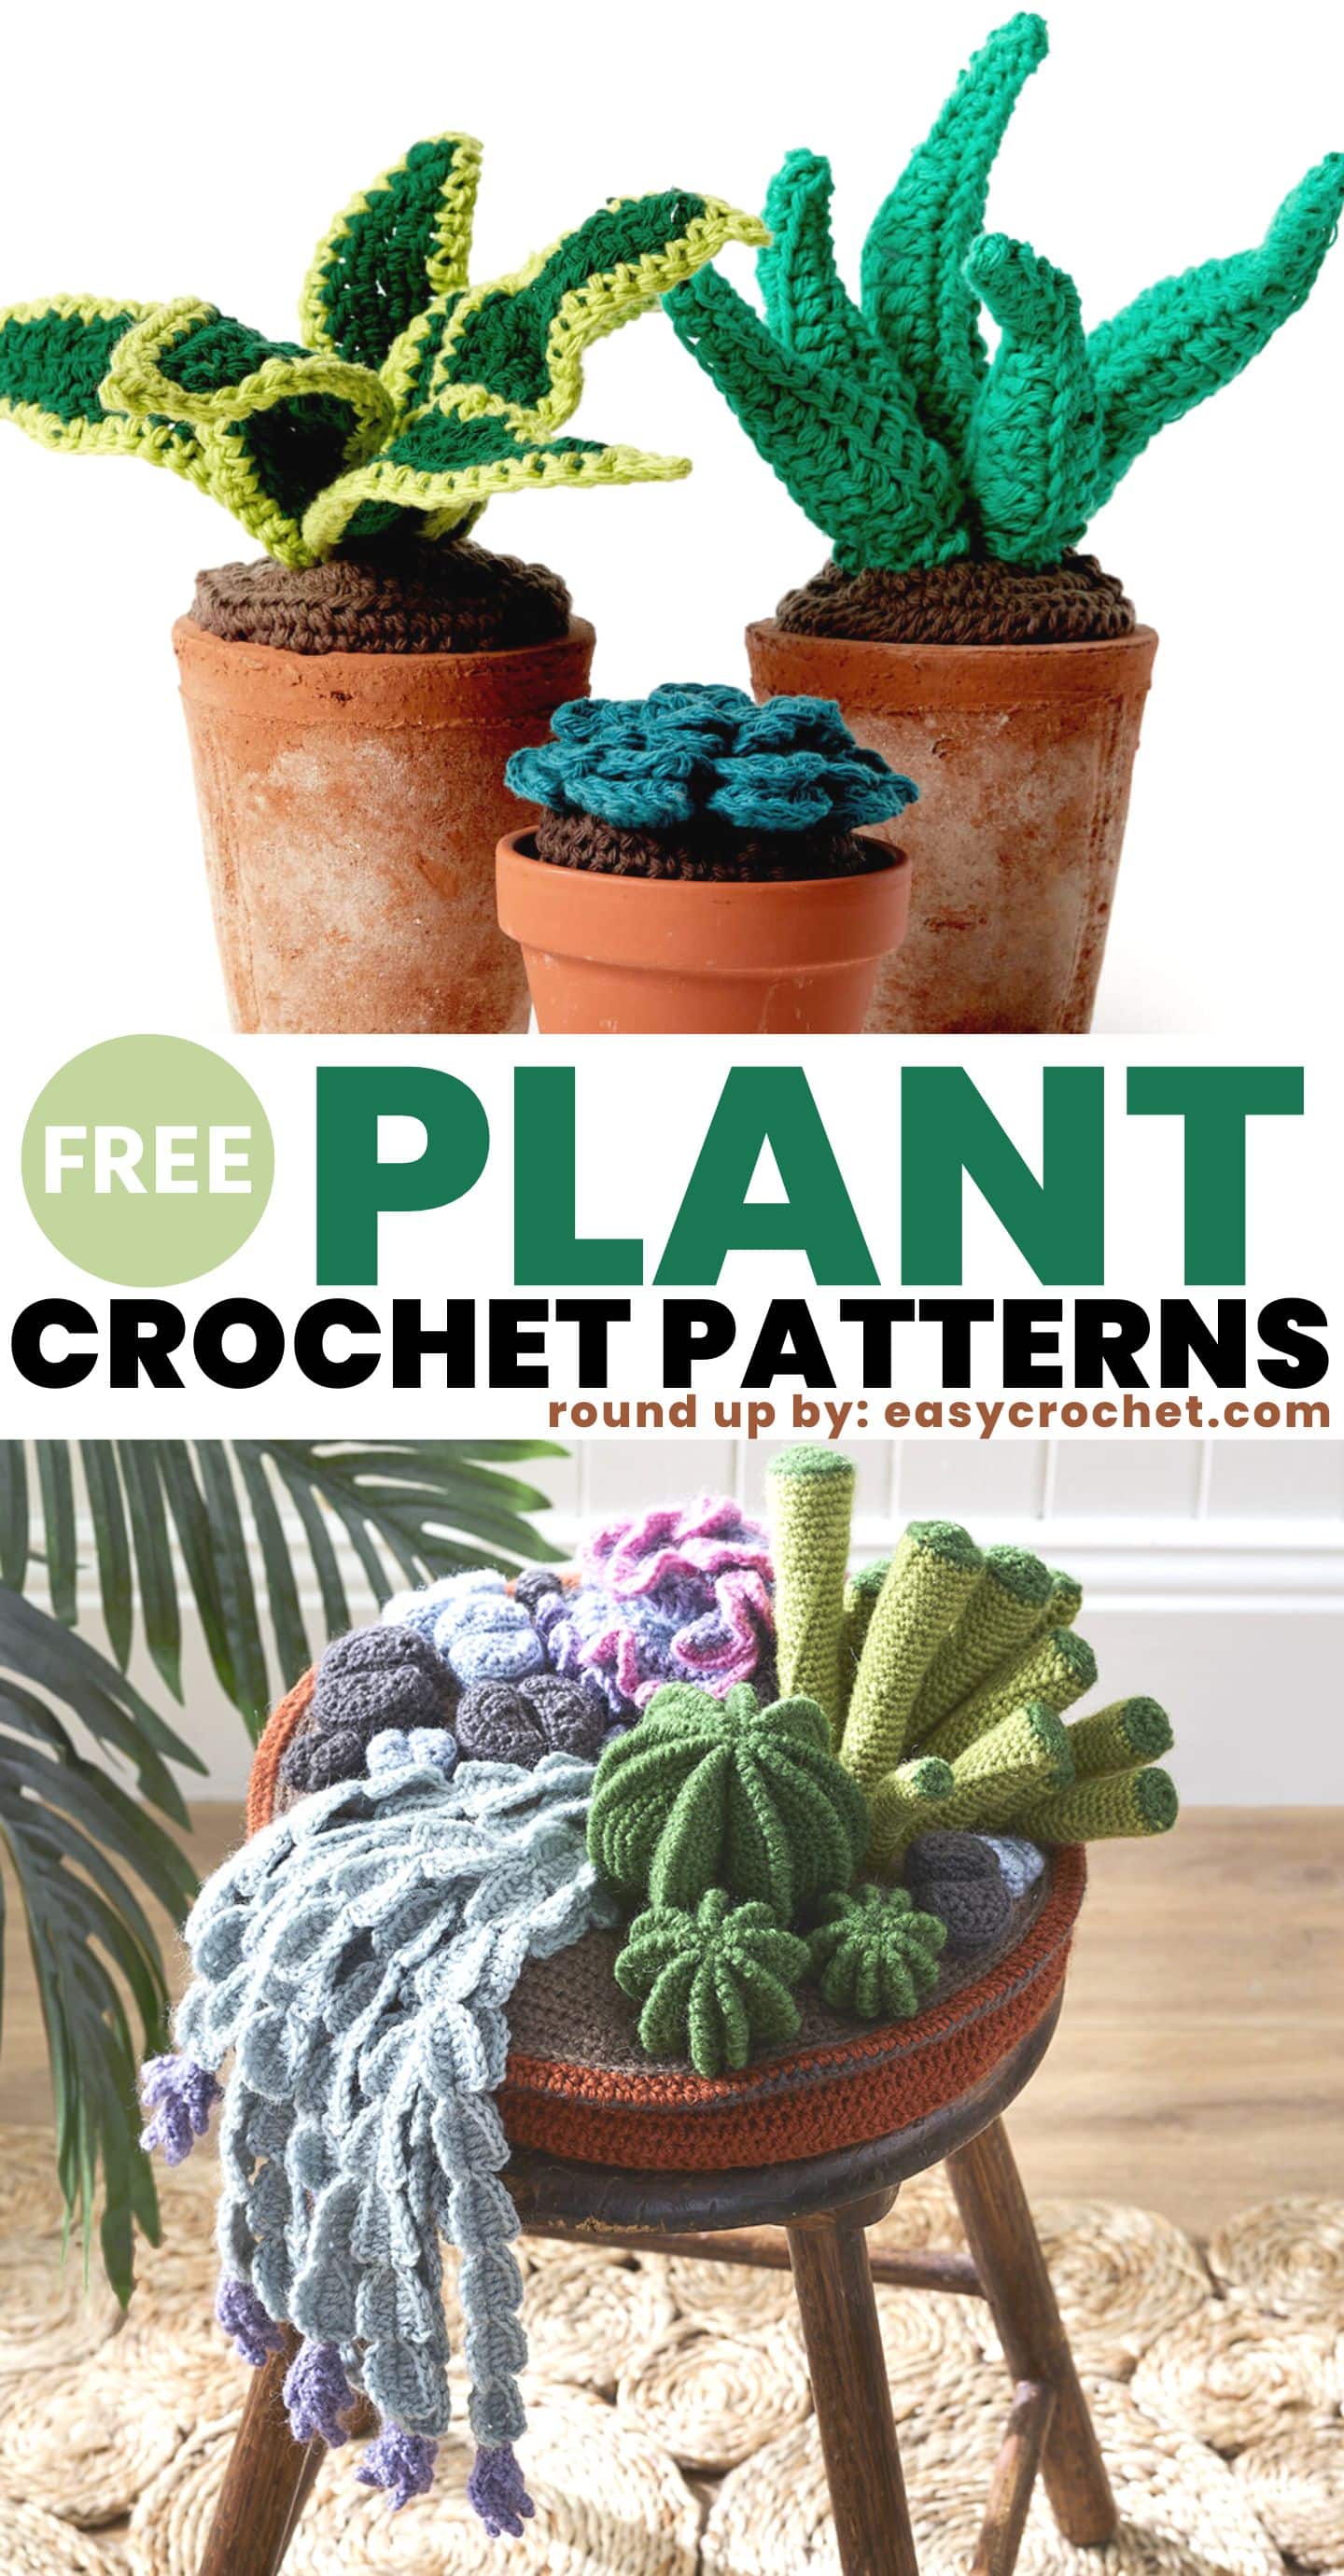 Top 10 Free Patterns for Crochet Plants - Easy Crochet Patterns